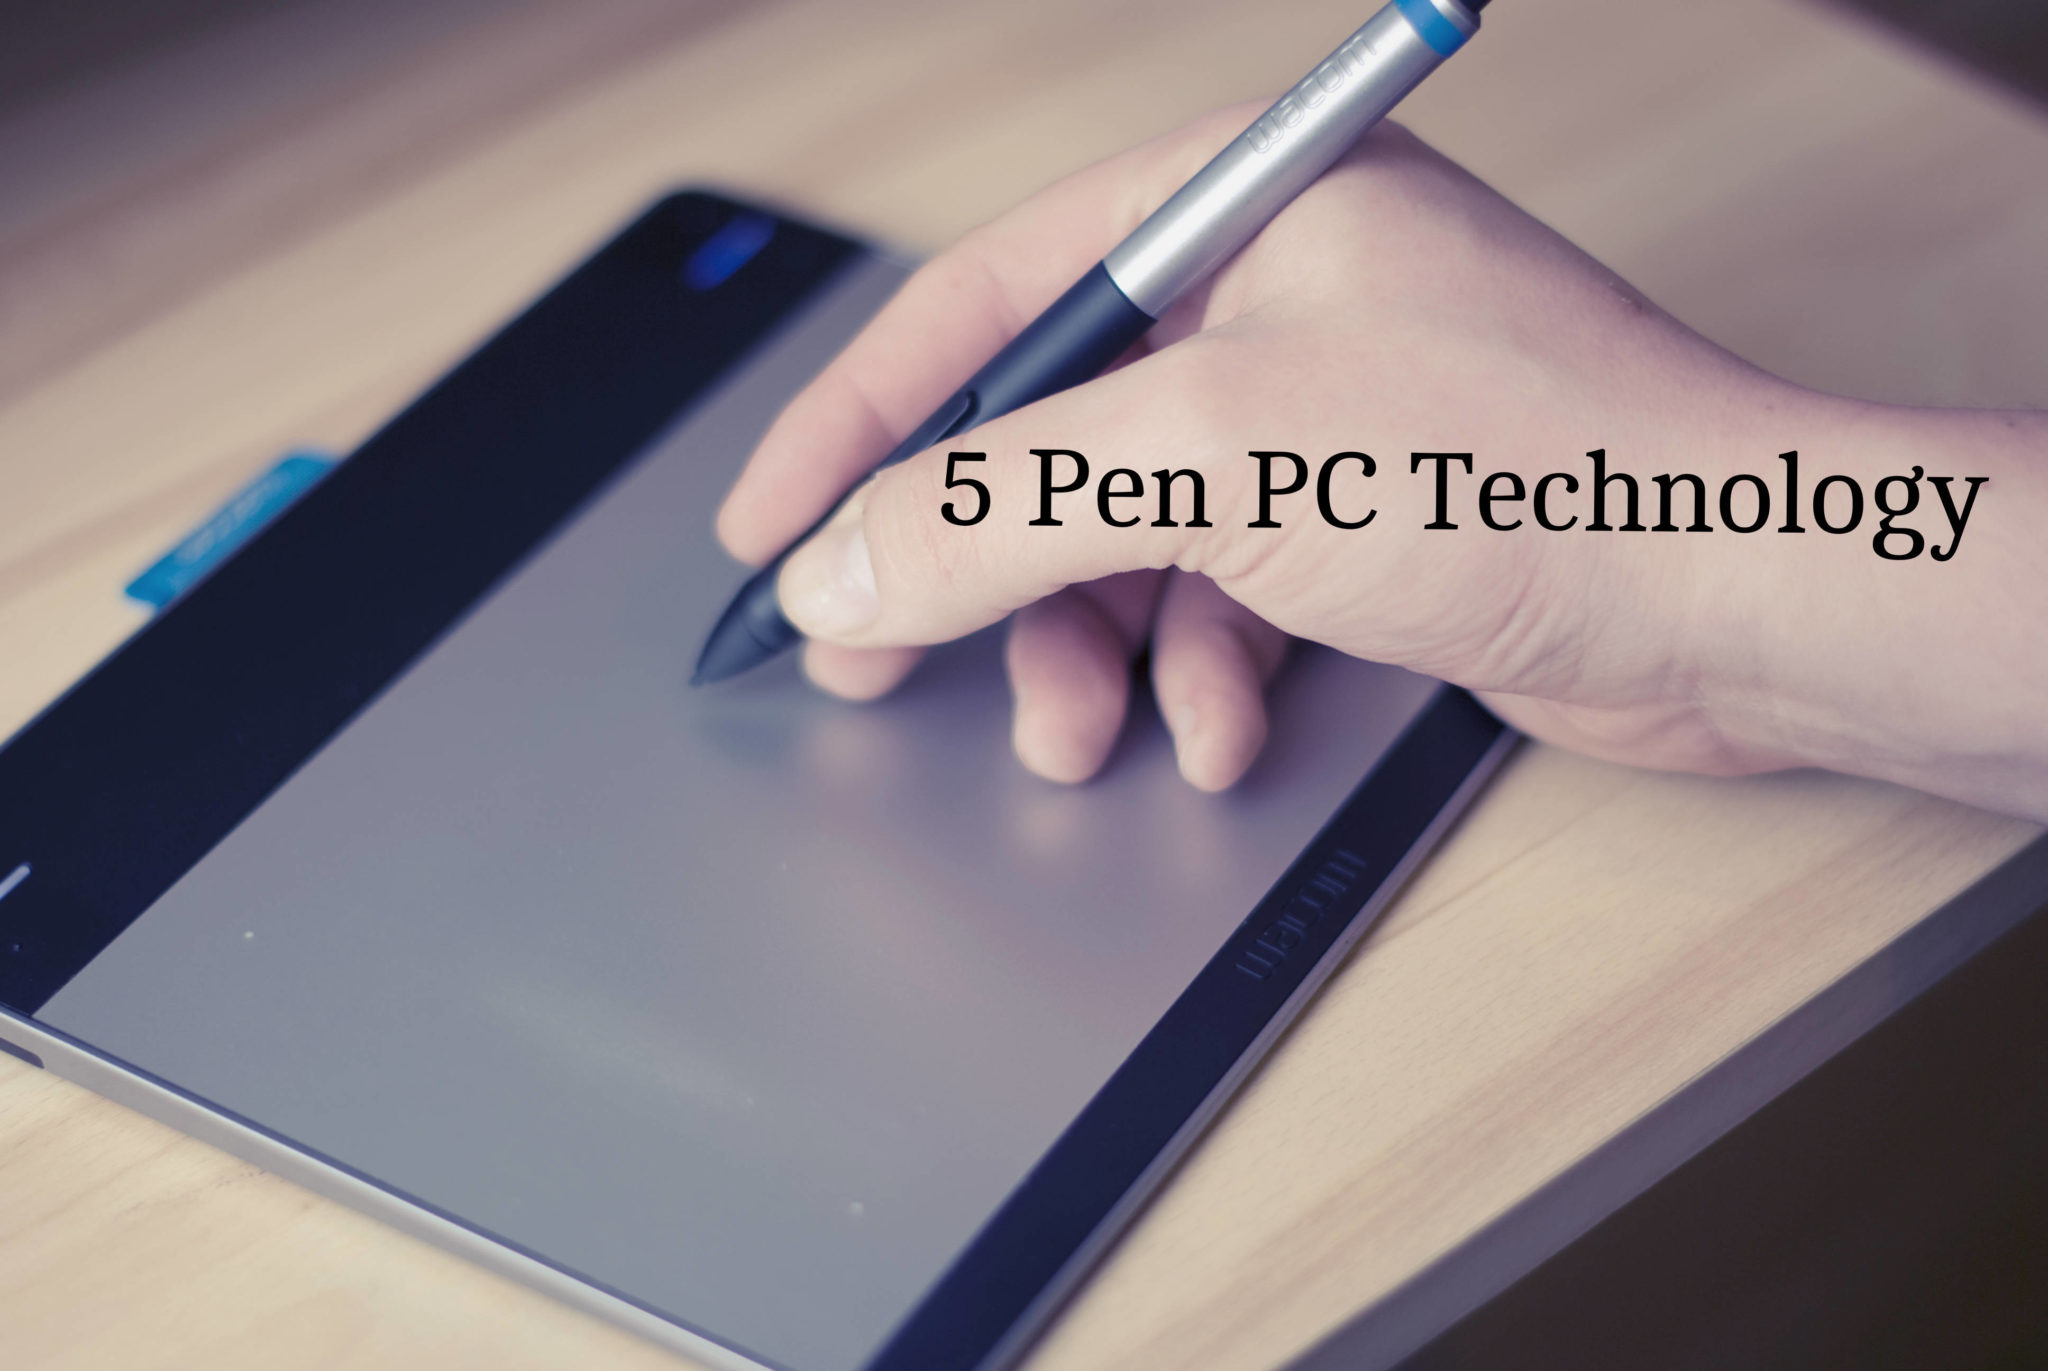 5 Pen PC Technology Pic